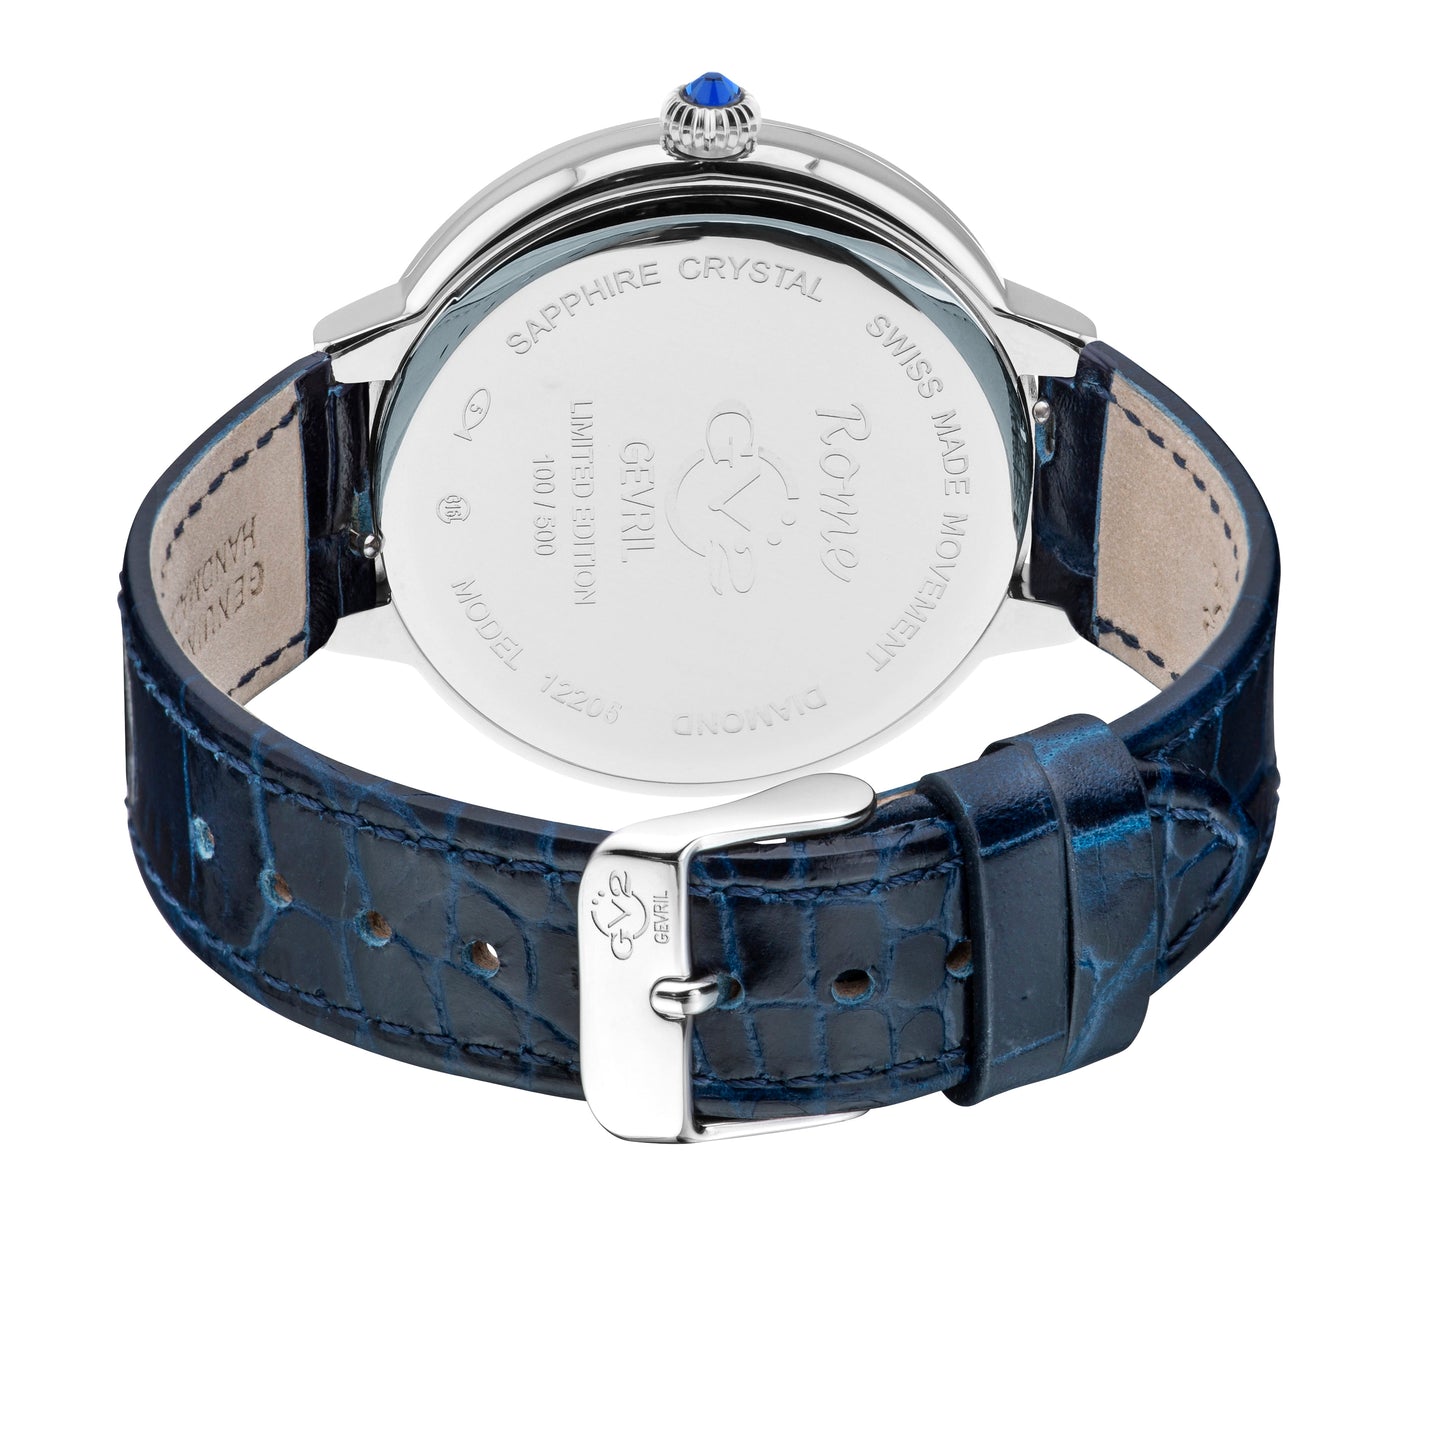 Gevril-Luxury-Swiss-Watches-GV2 Rome Diamond-12205